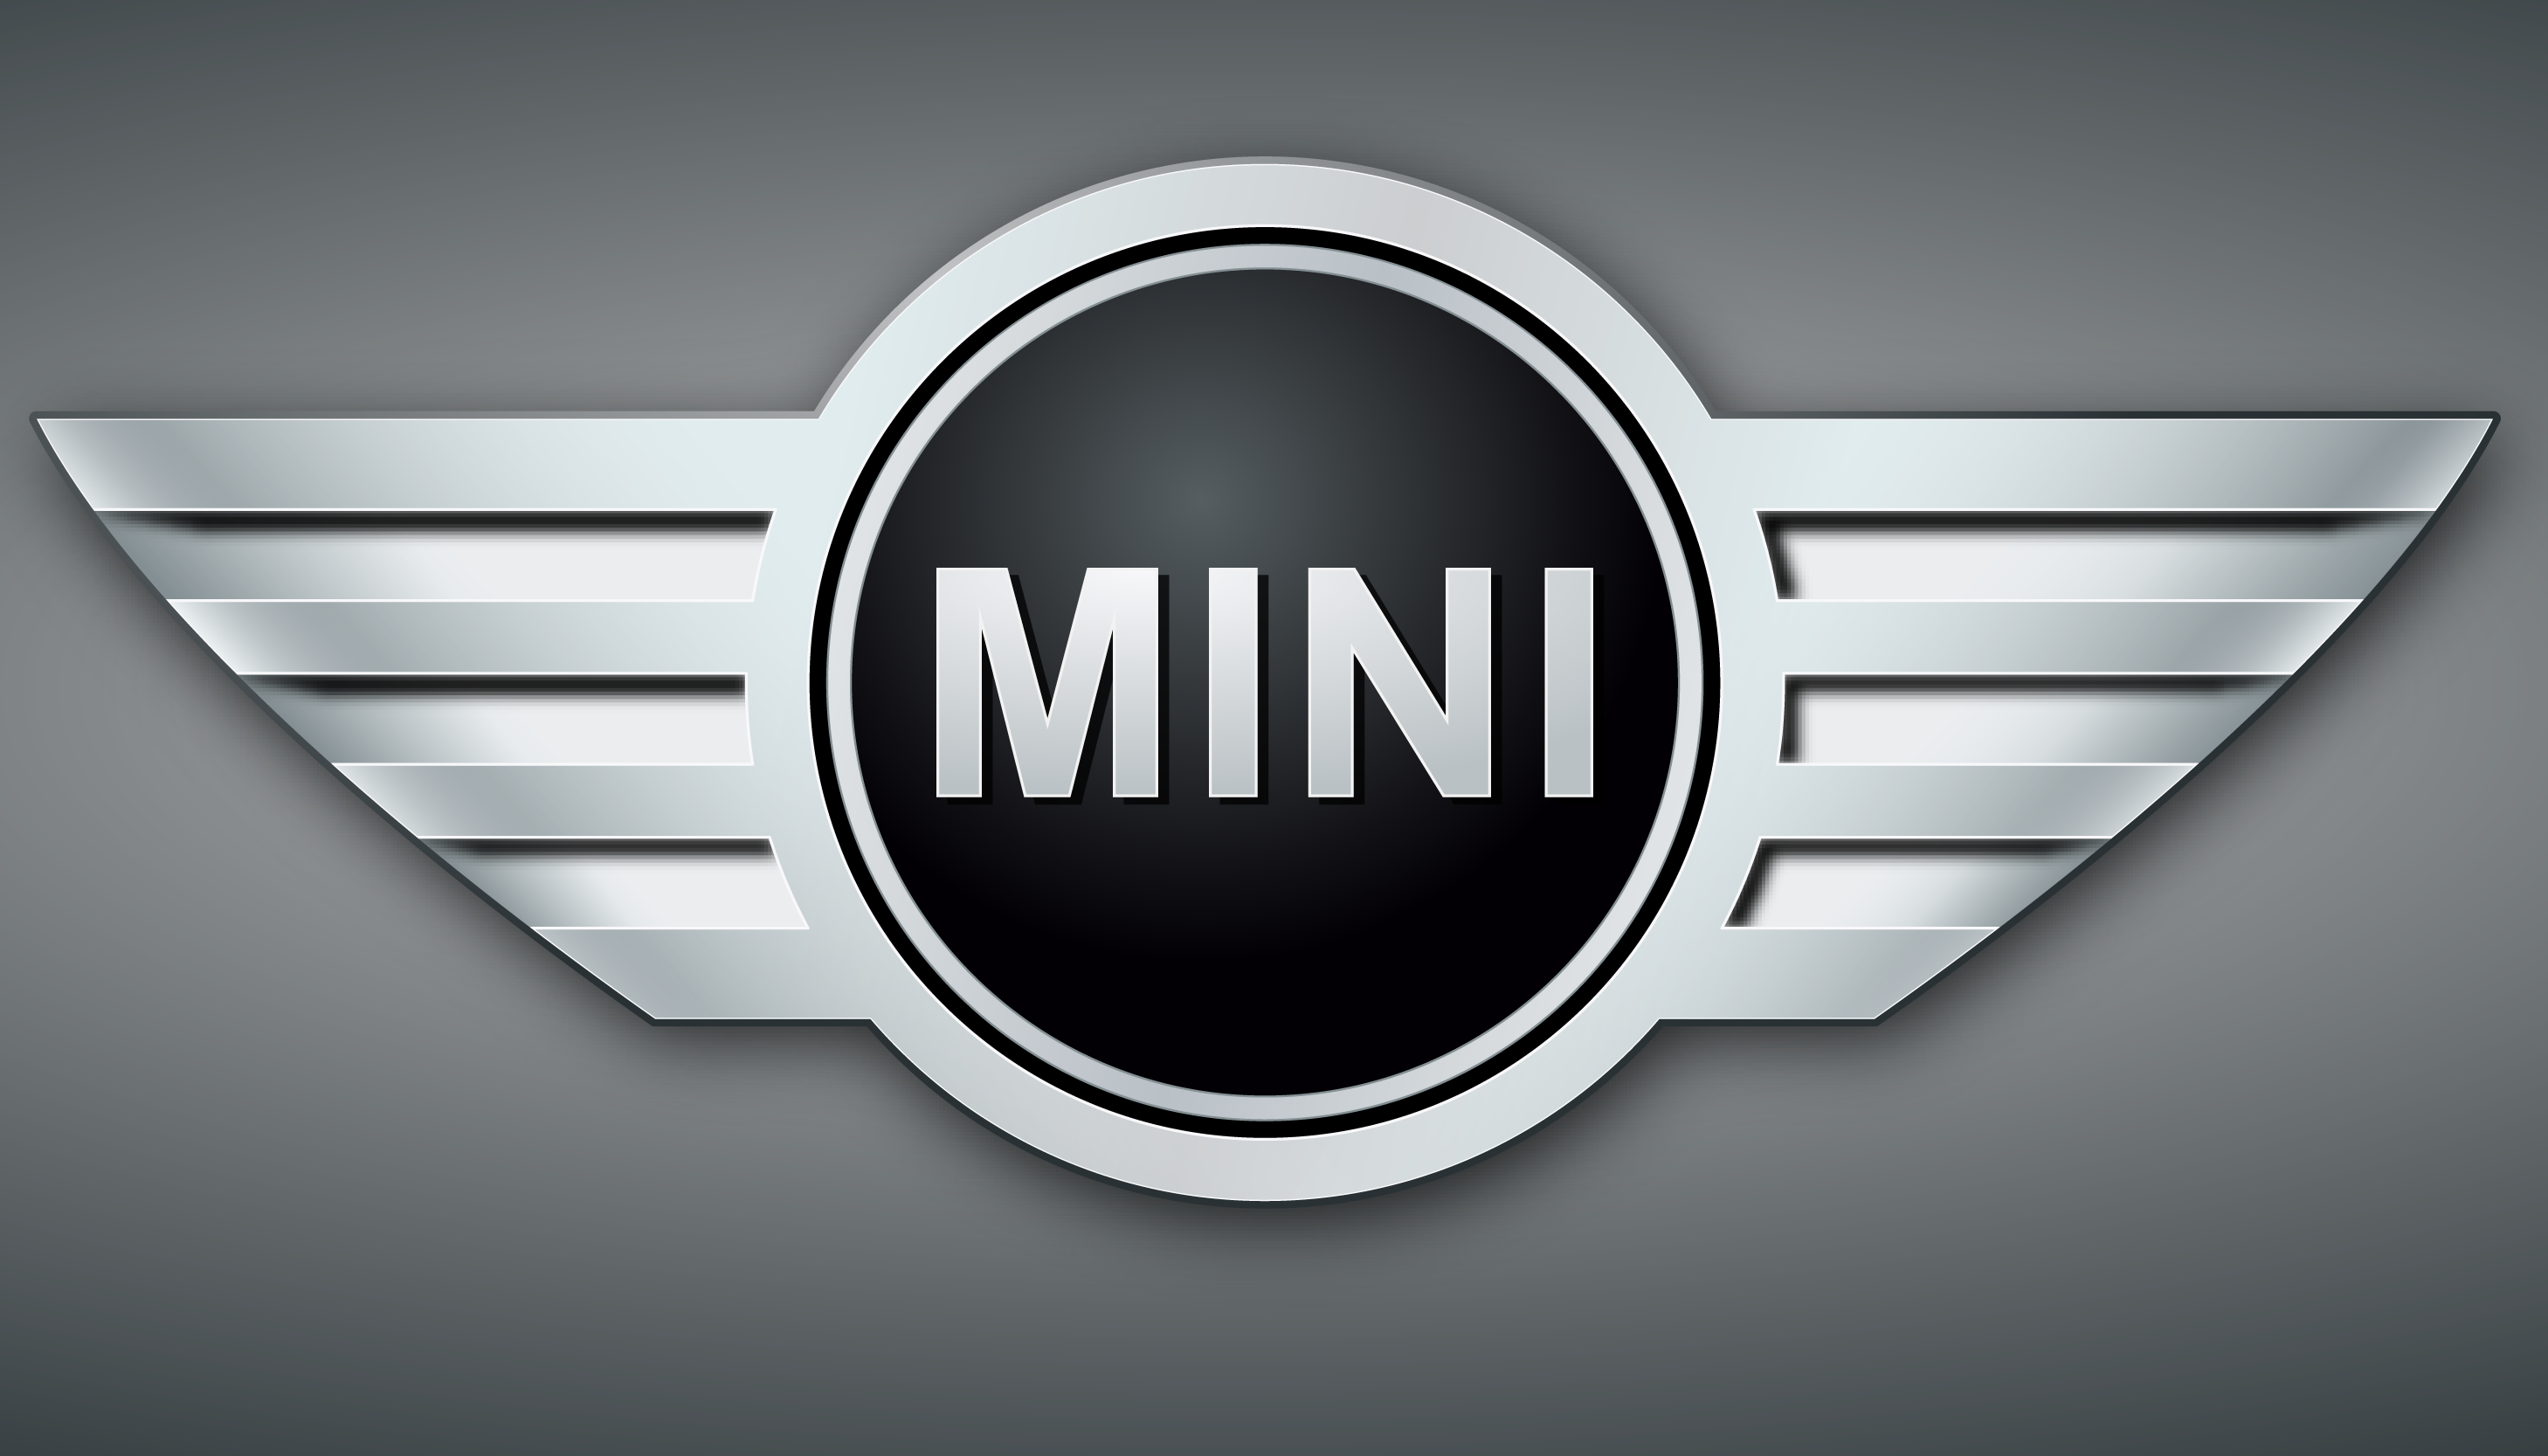 Mini Cooper Emblem Logo by duceduc on DeviantArt